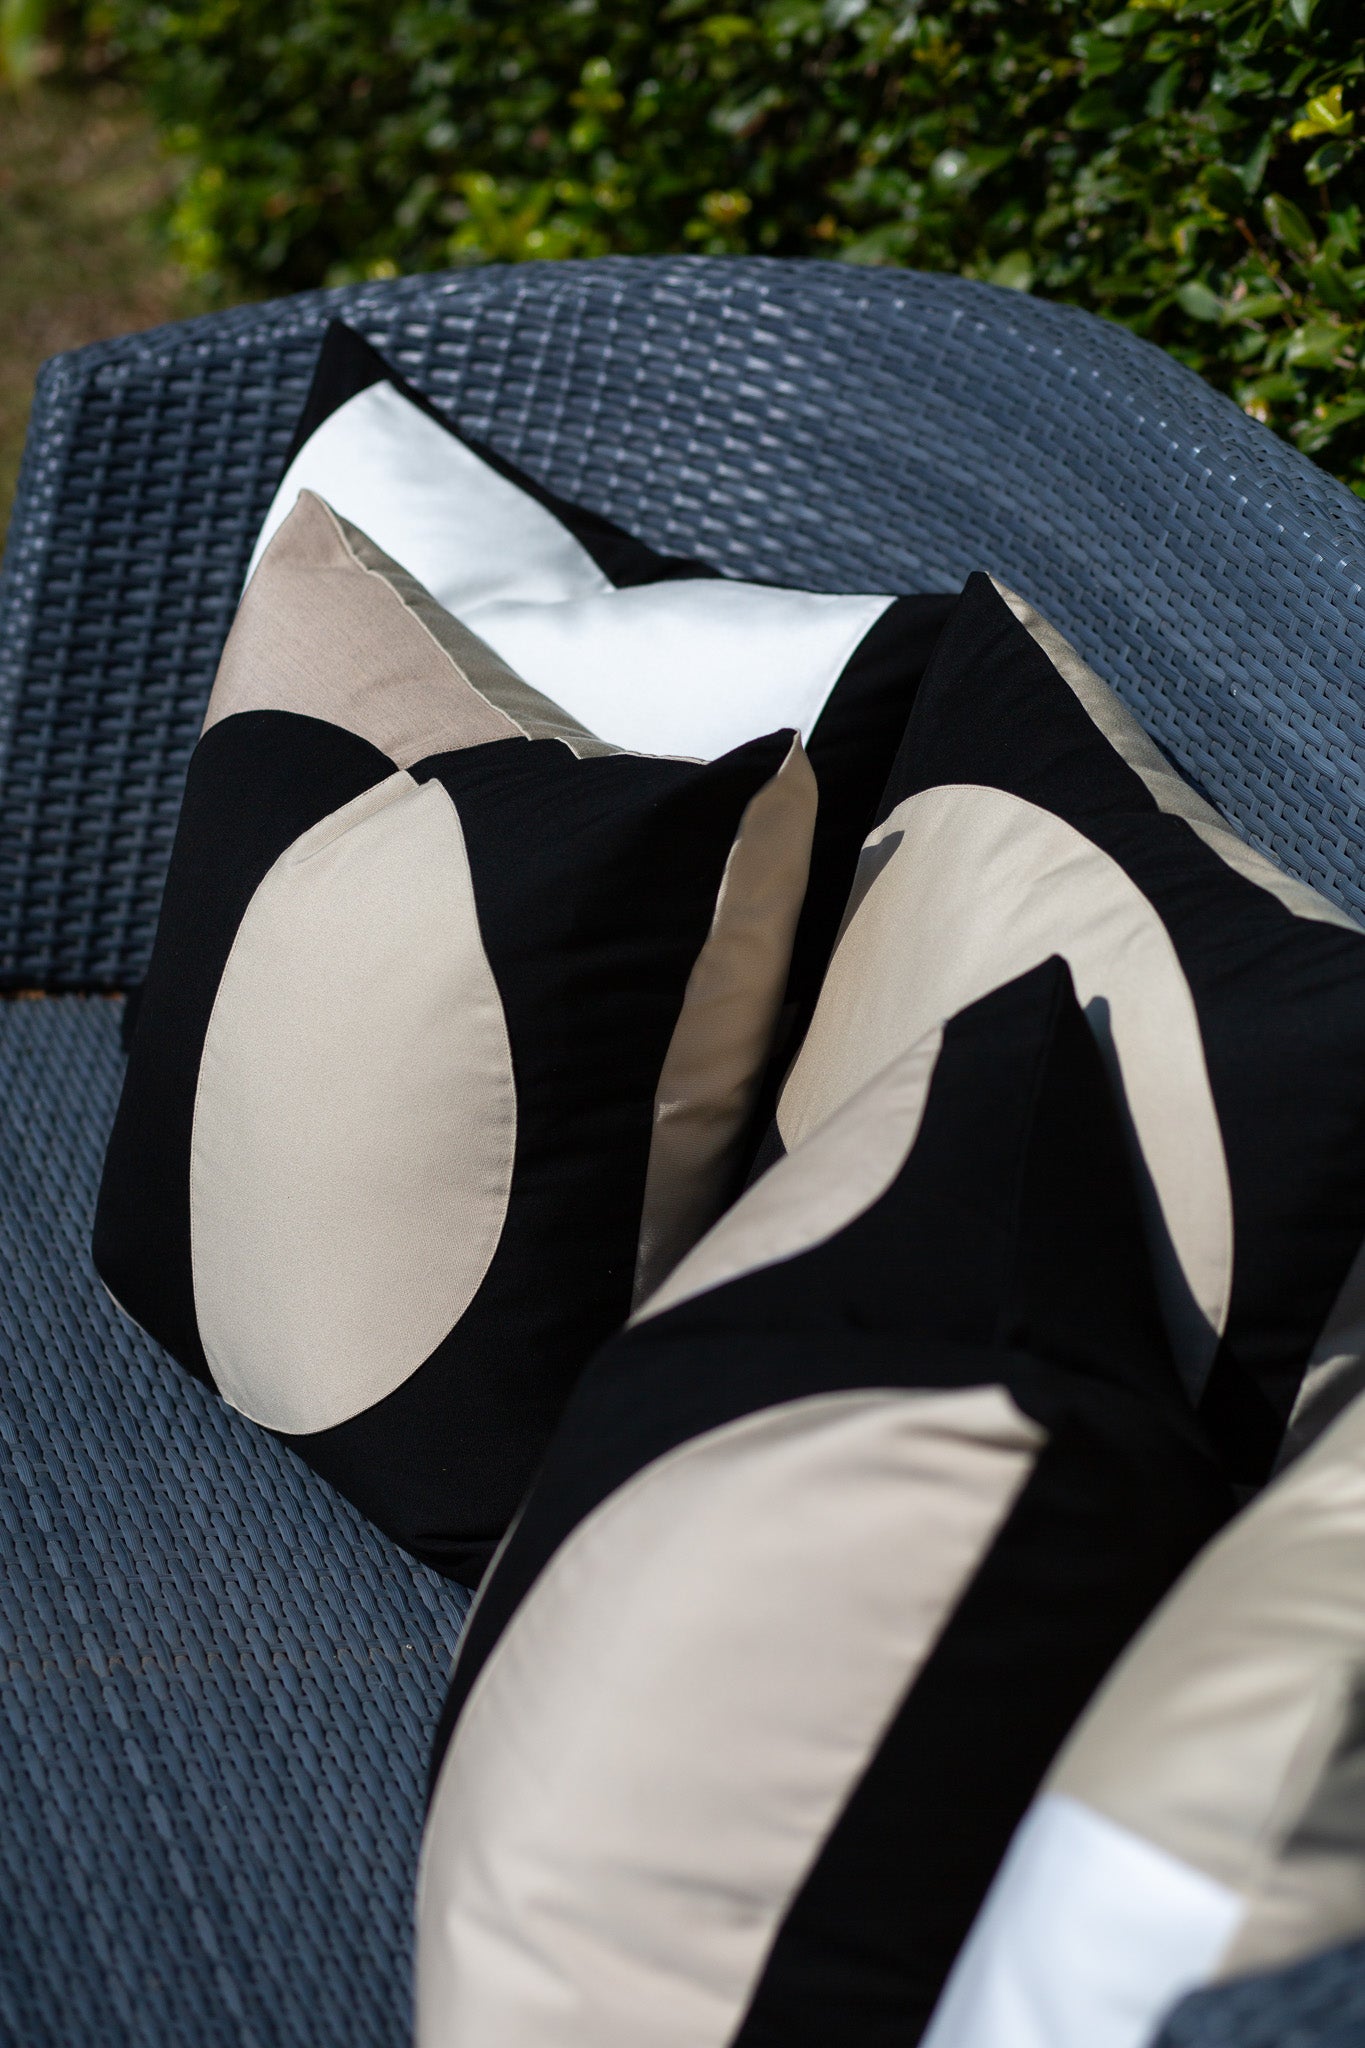 Bandhini - Design House Outdoor Cushion Outdoor Global Earth Moon Lounge Cushion 55 x 55cm